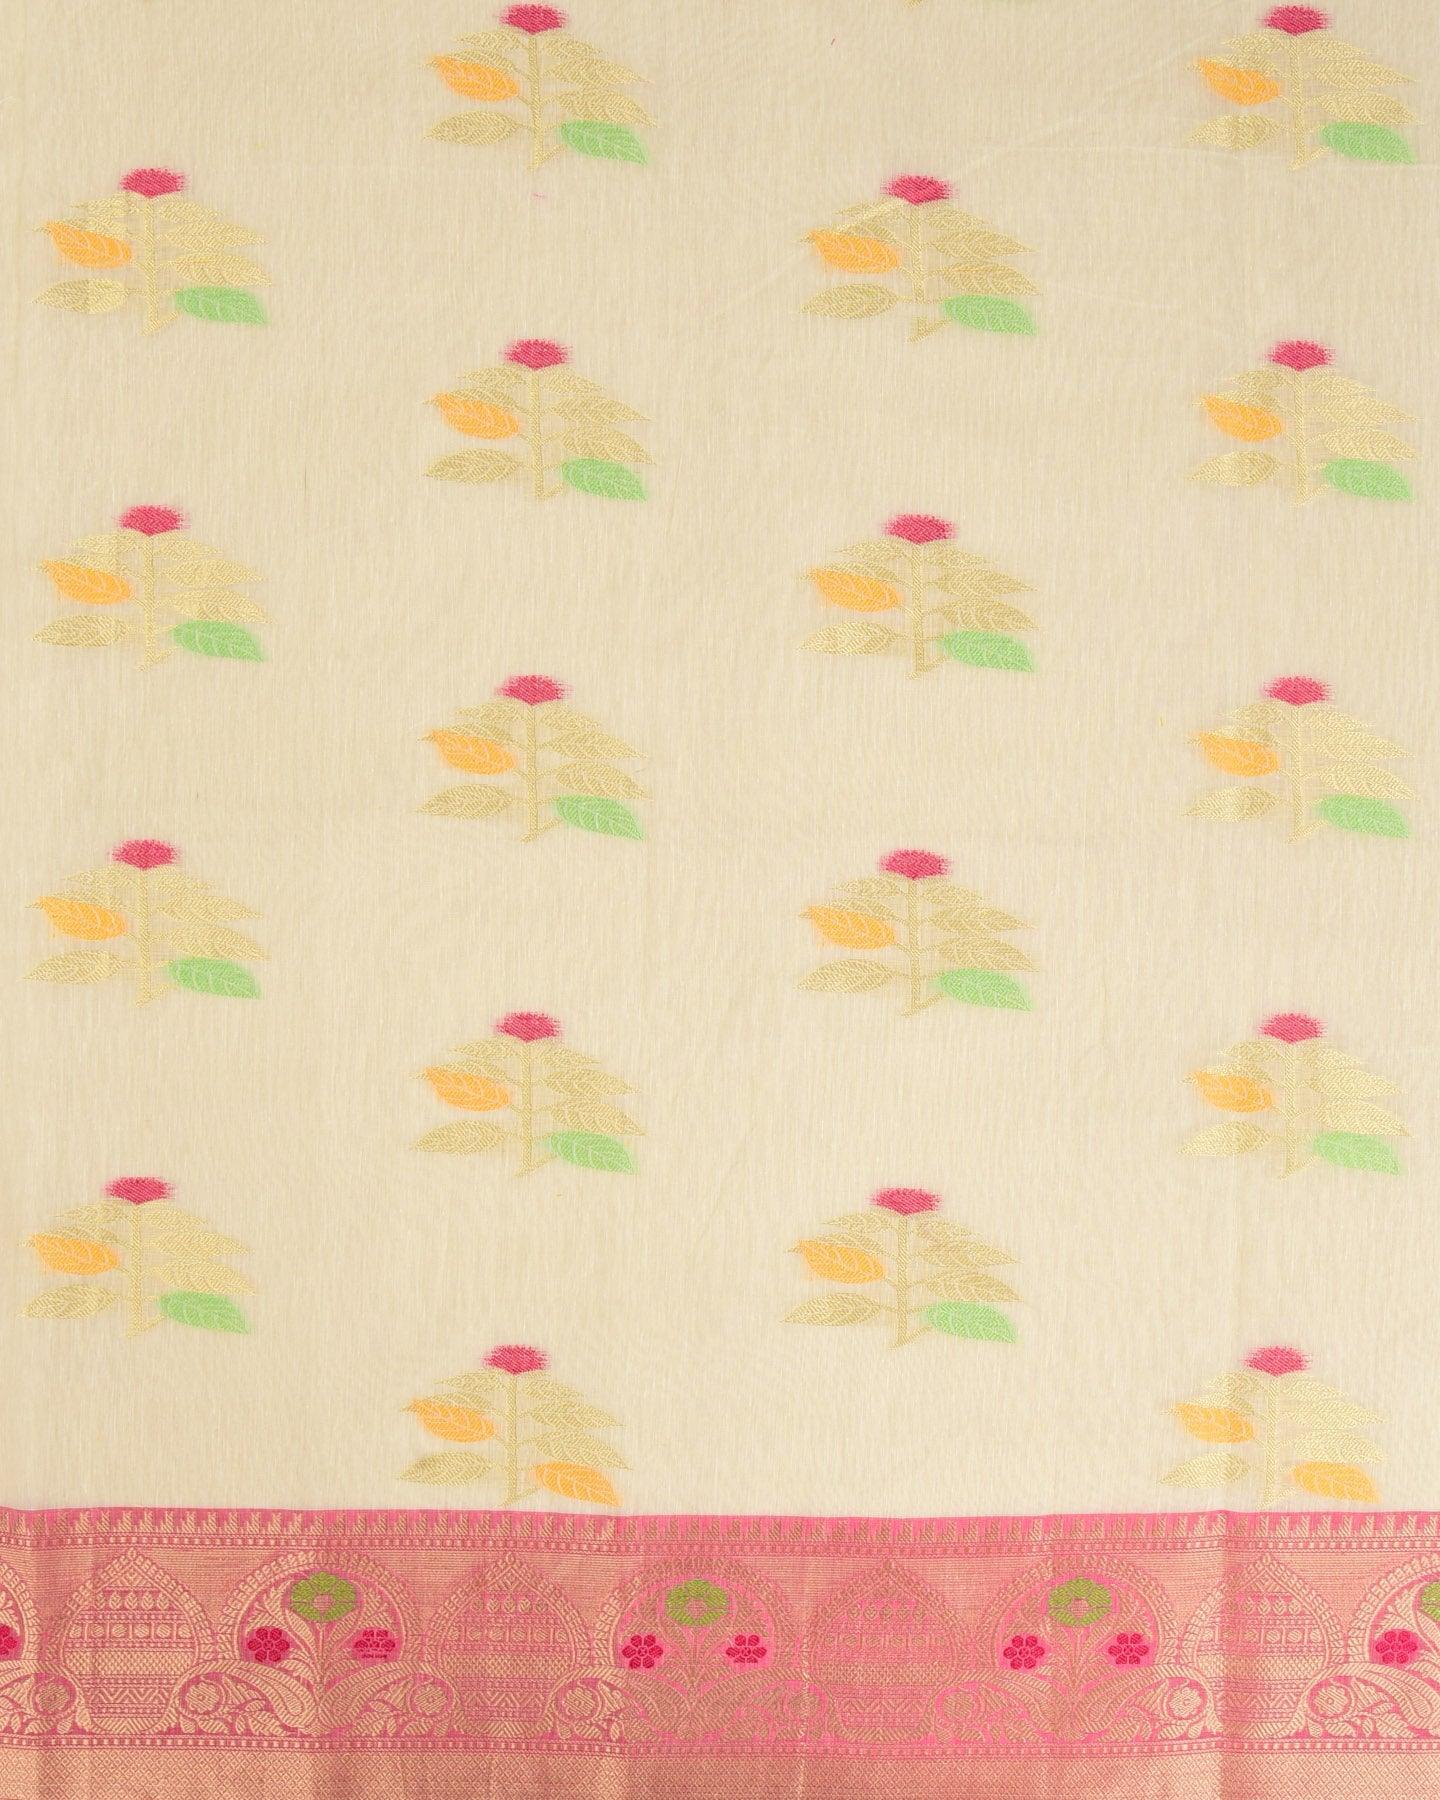 White Banarasi Tehra Sona Rupa Zari Floral Buta Cutwork Brocade Woven Cotton Silk Saree with Contrast Pink Border - By HolyWeaves, Benares